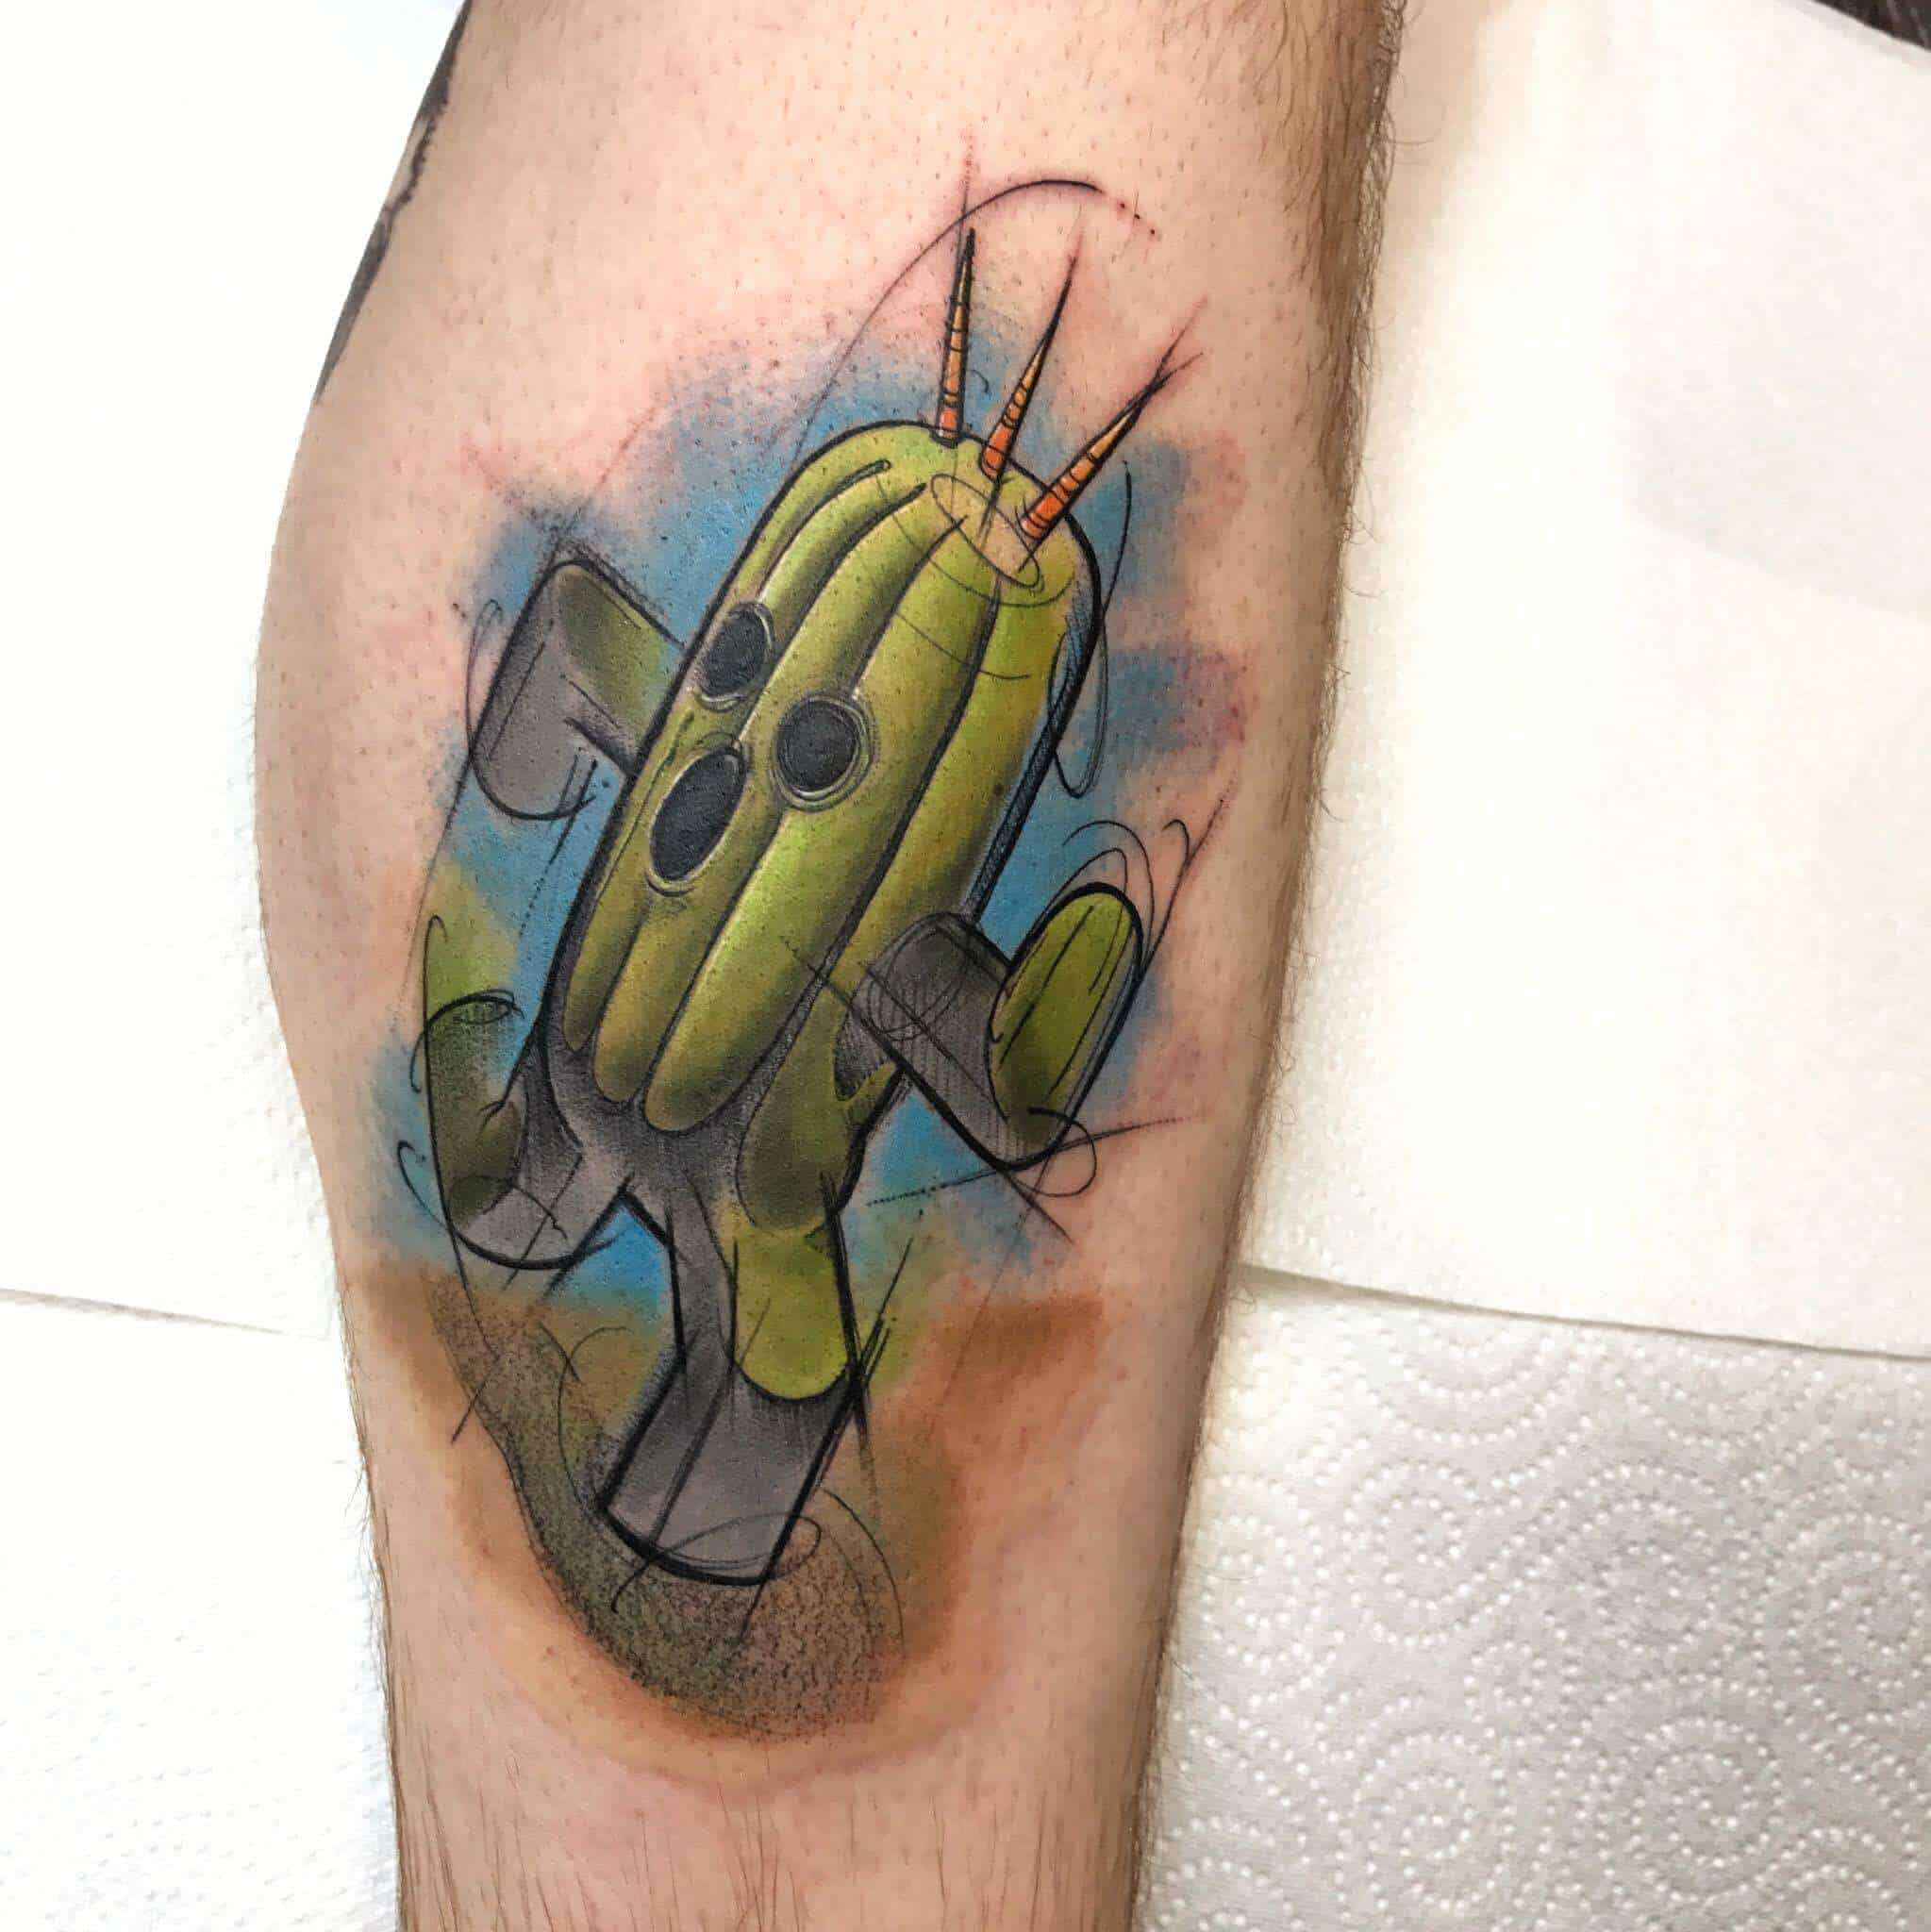 cactuar tattoo on leg